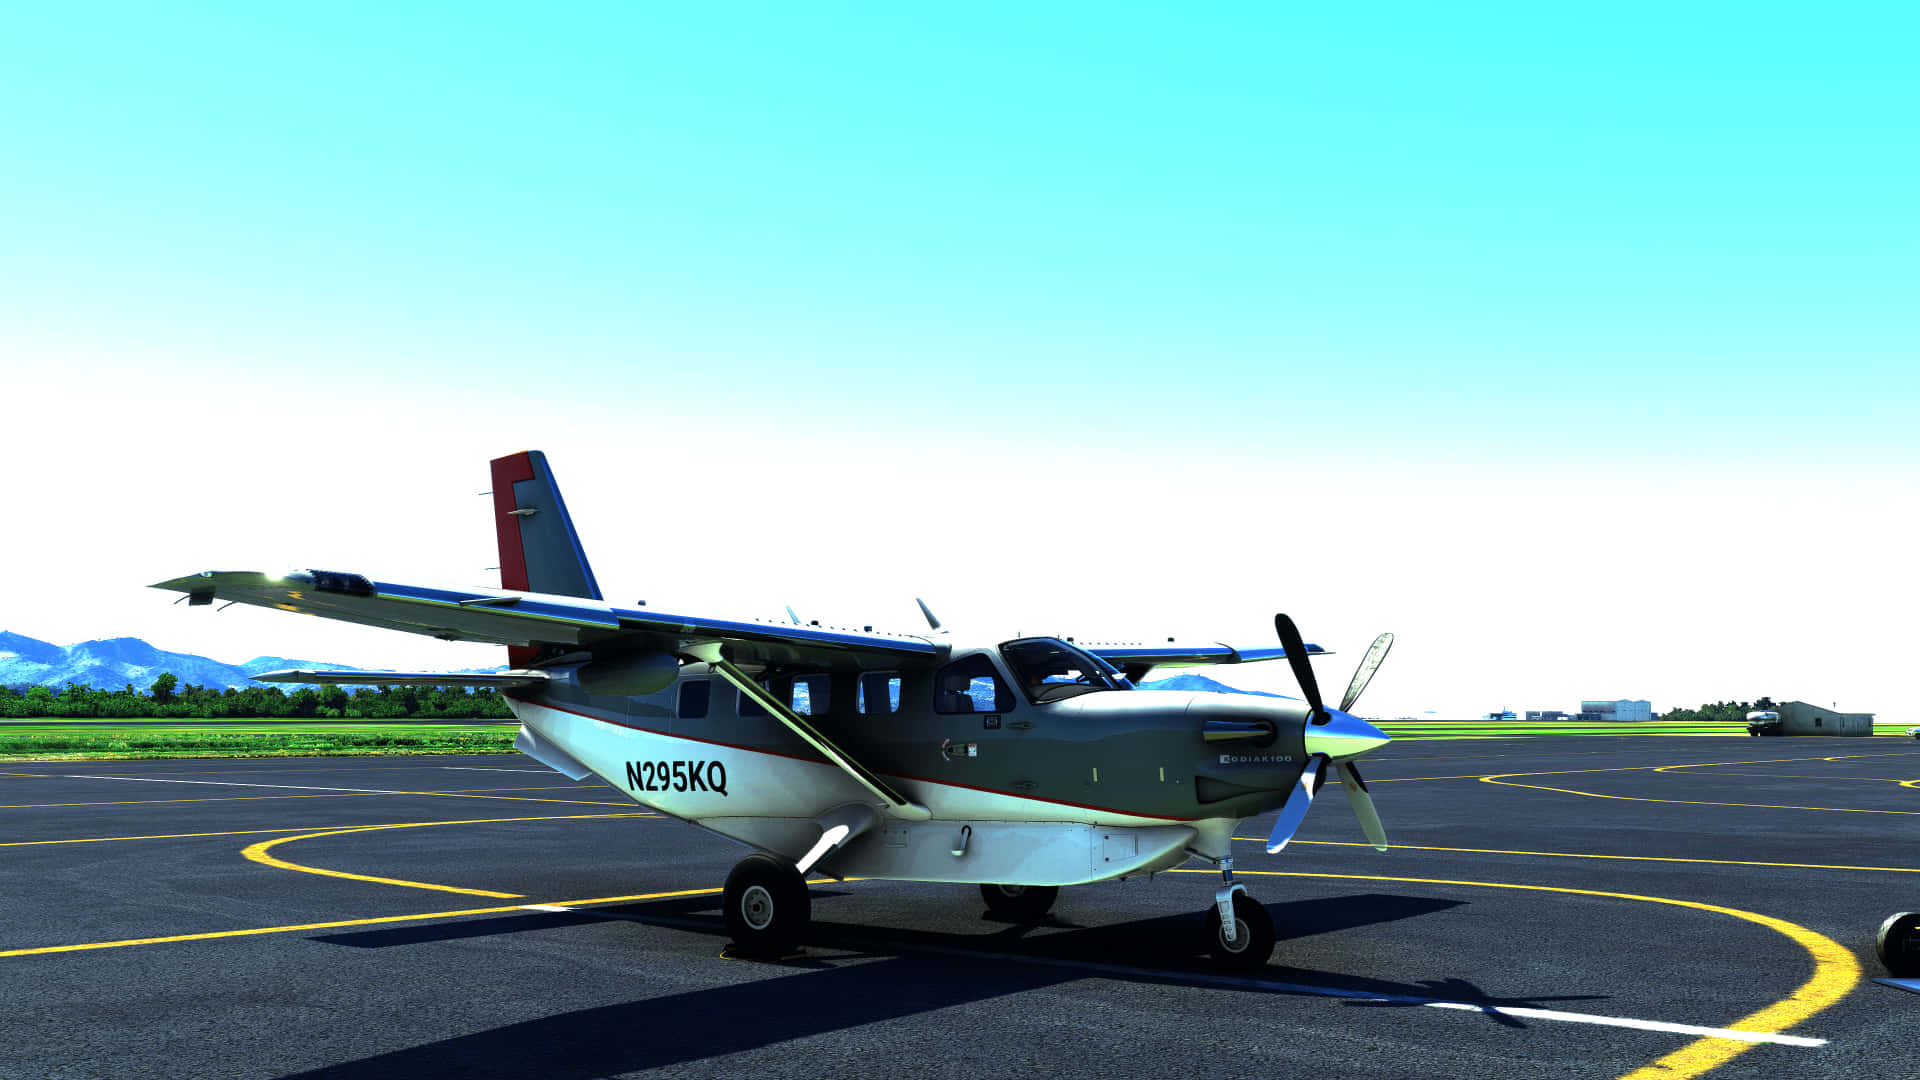 Take Flight with Microsoft Flight Simulator